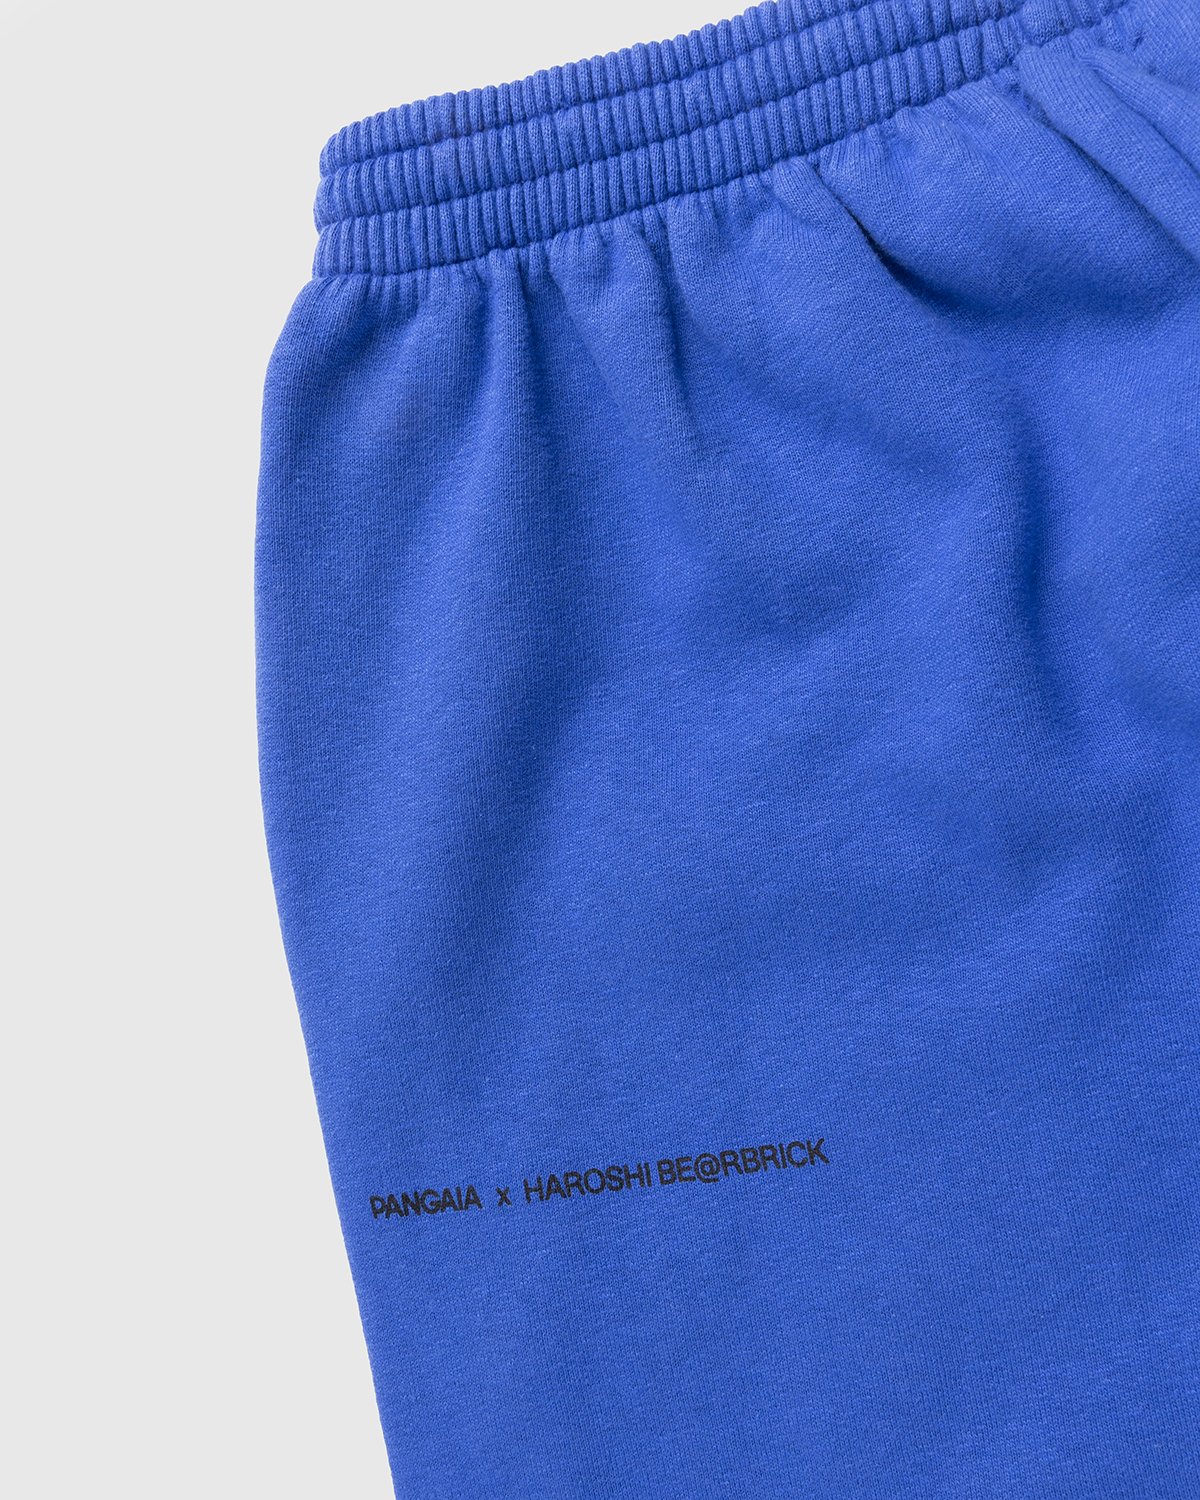 Pangaia x Haroshi - Be@rbrick Recycled Cotton Track Pants Blue - Clothing - Blue - Image 4